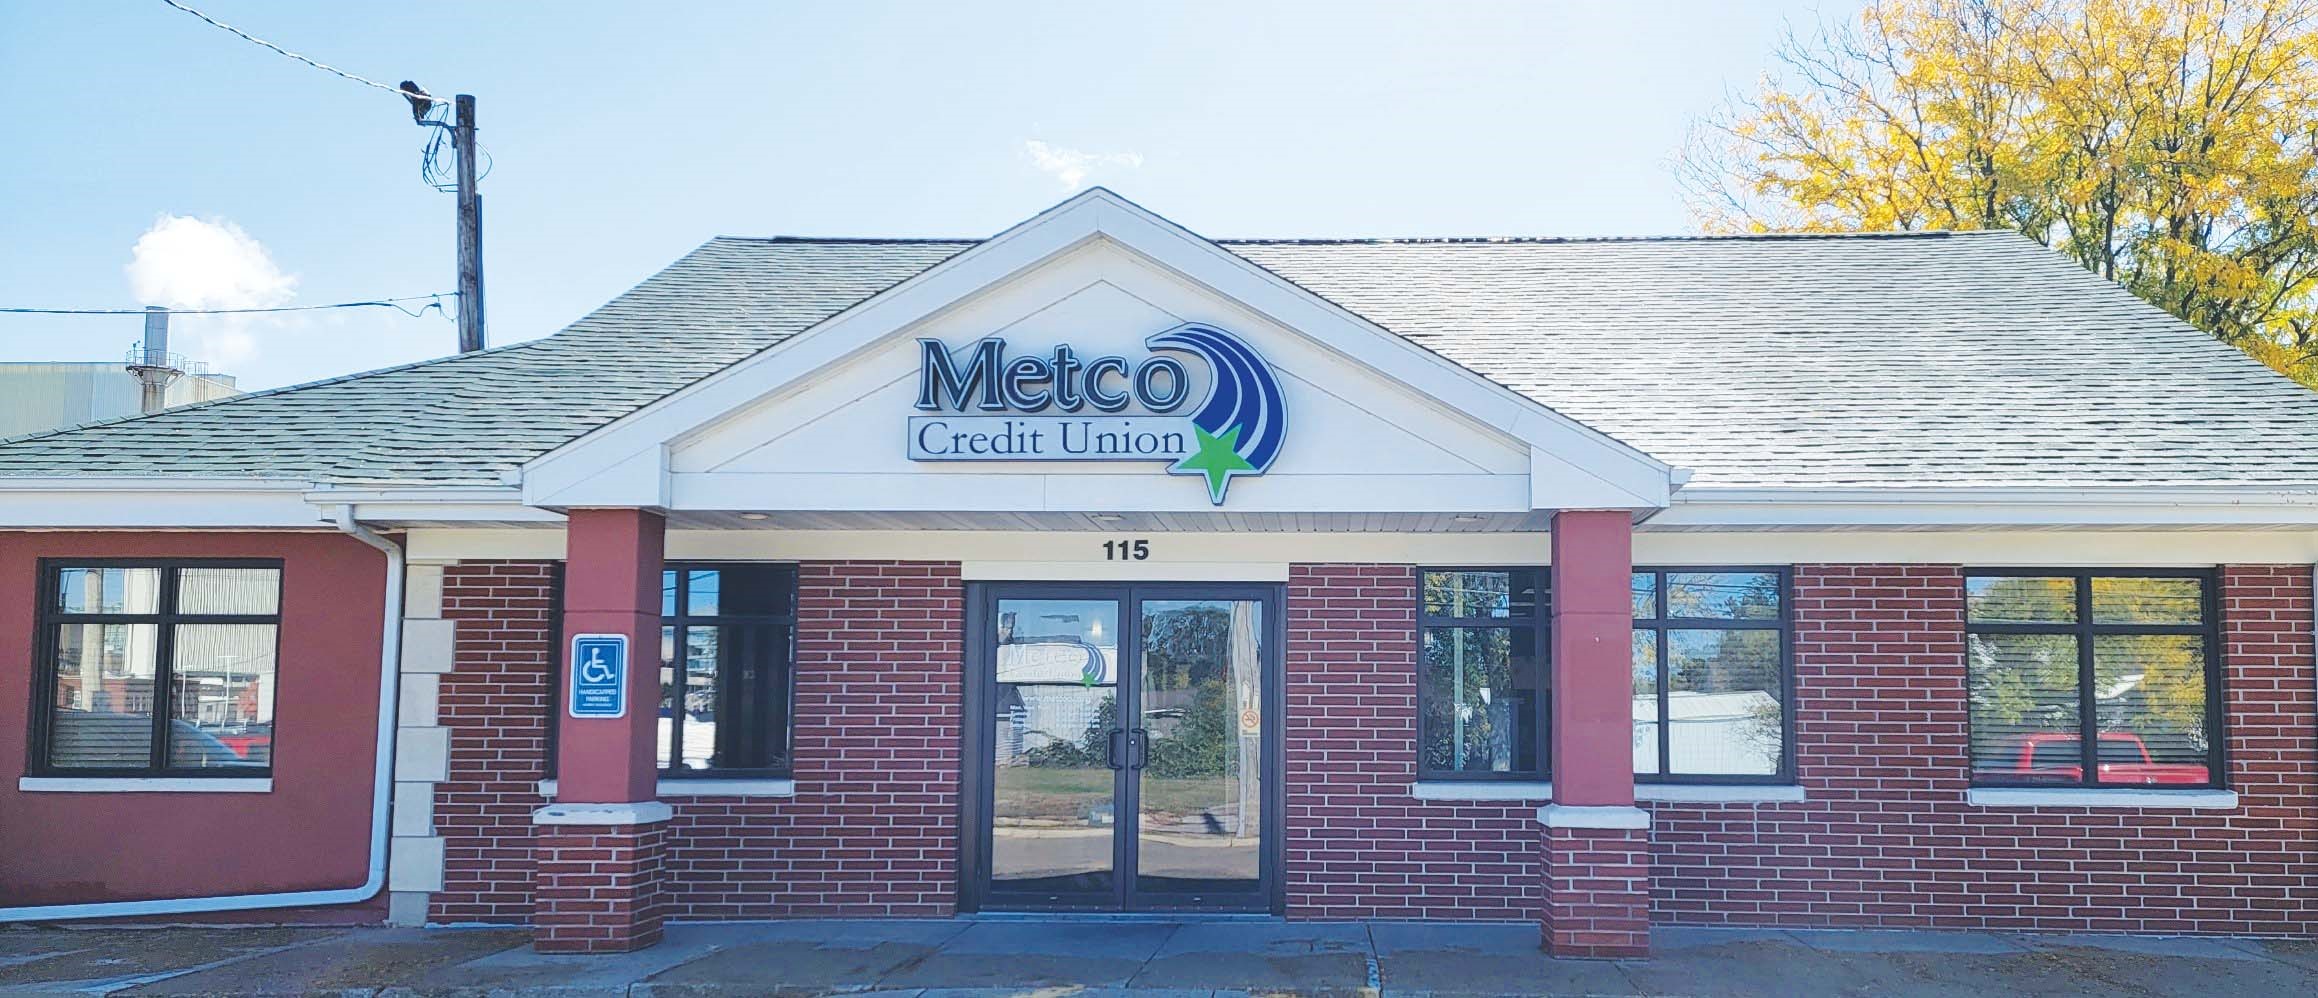 Exterior of the Metco Credit Union building.